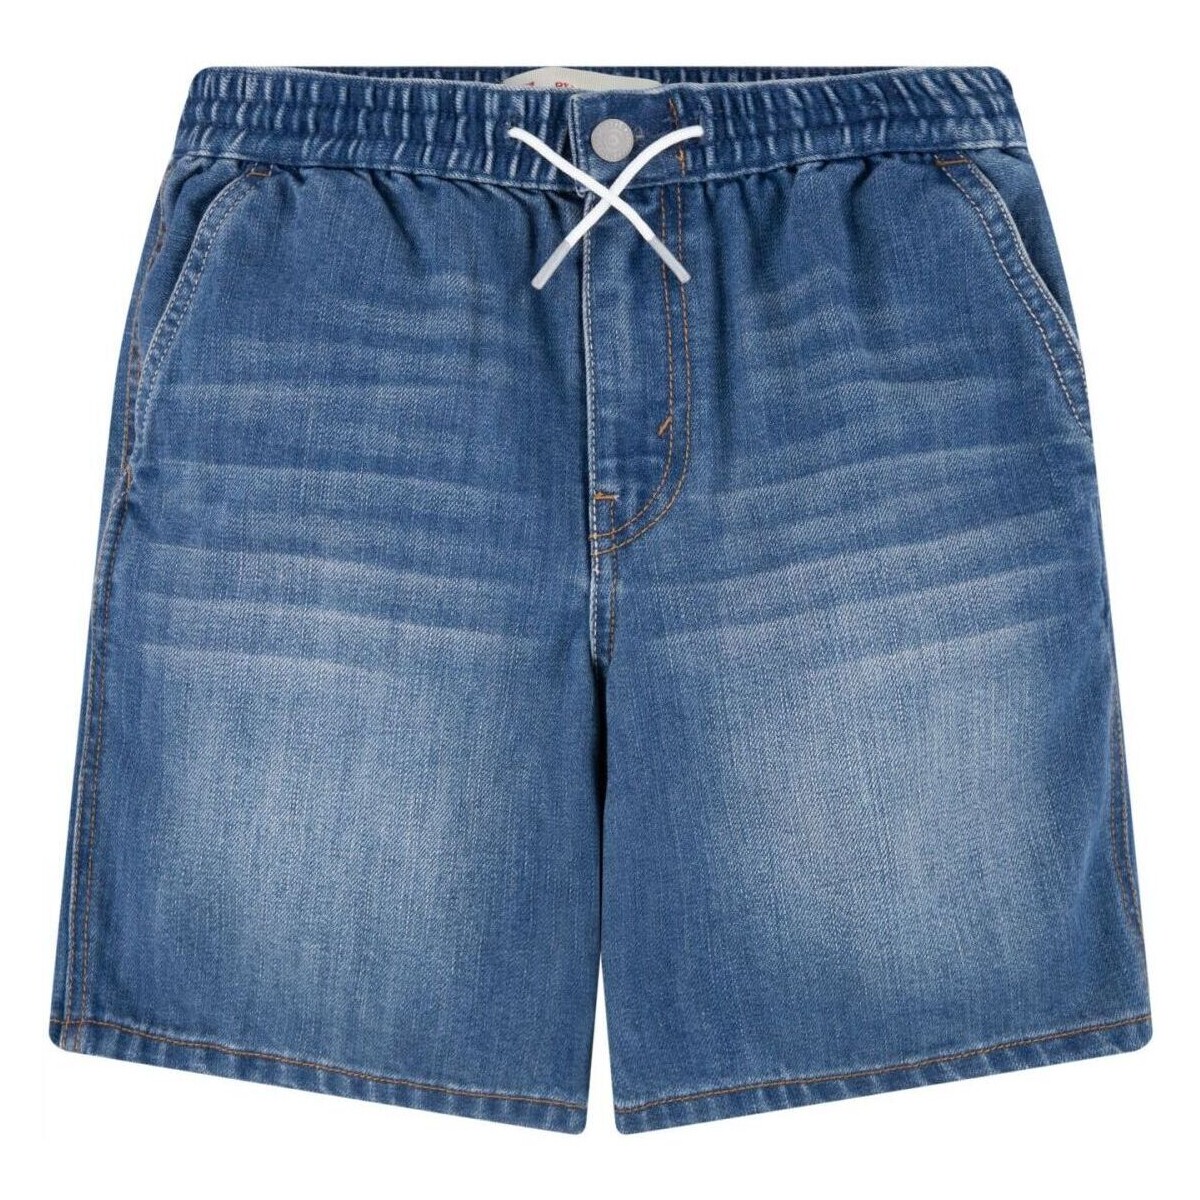 textil Niños Shorts / Bermudas Levi's 9EH003 M1I - RELAXED SHORT-FIND A WAY Azul